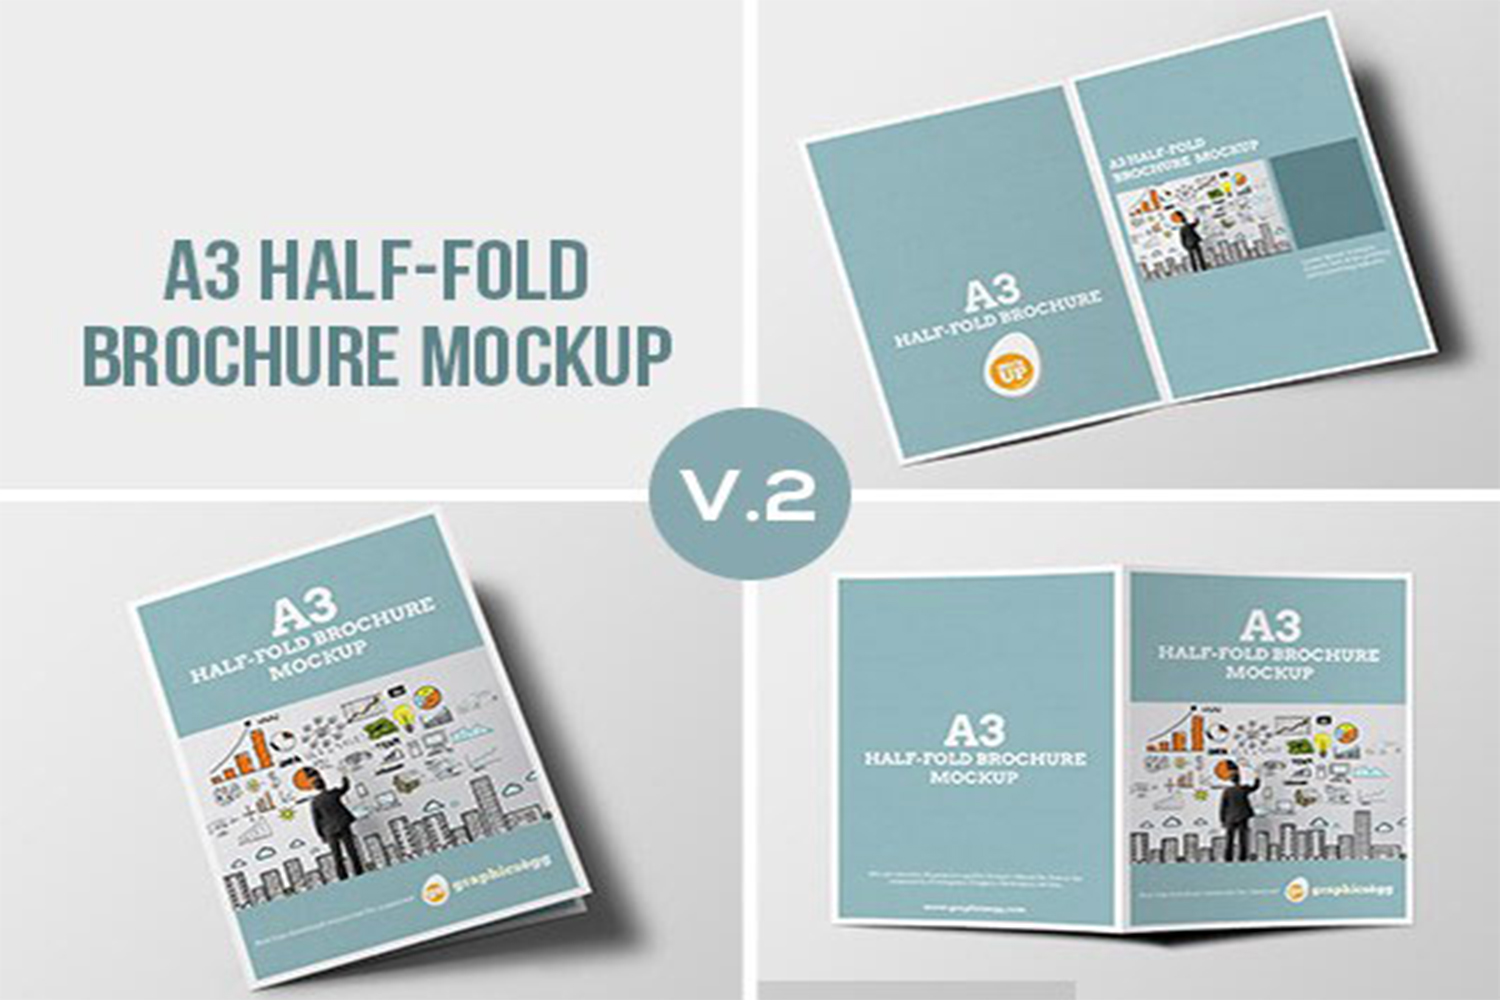 Half-Fold Brochure Mockup Free Download